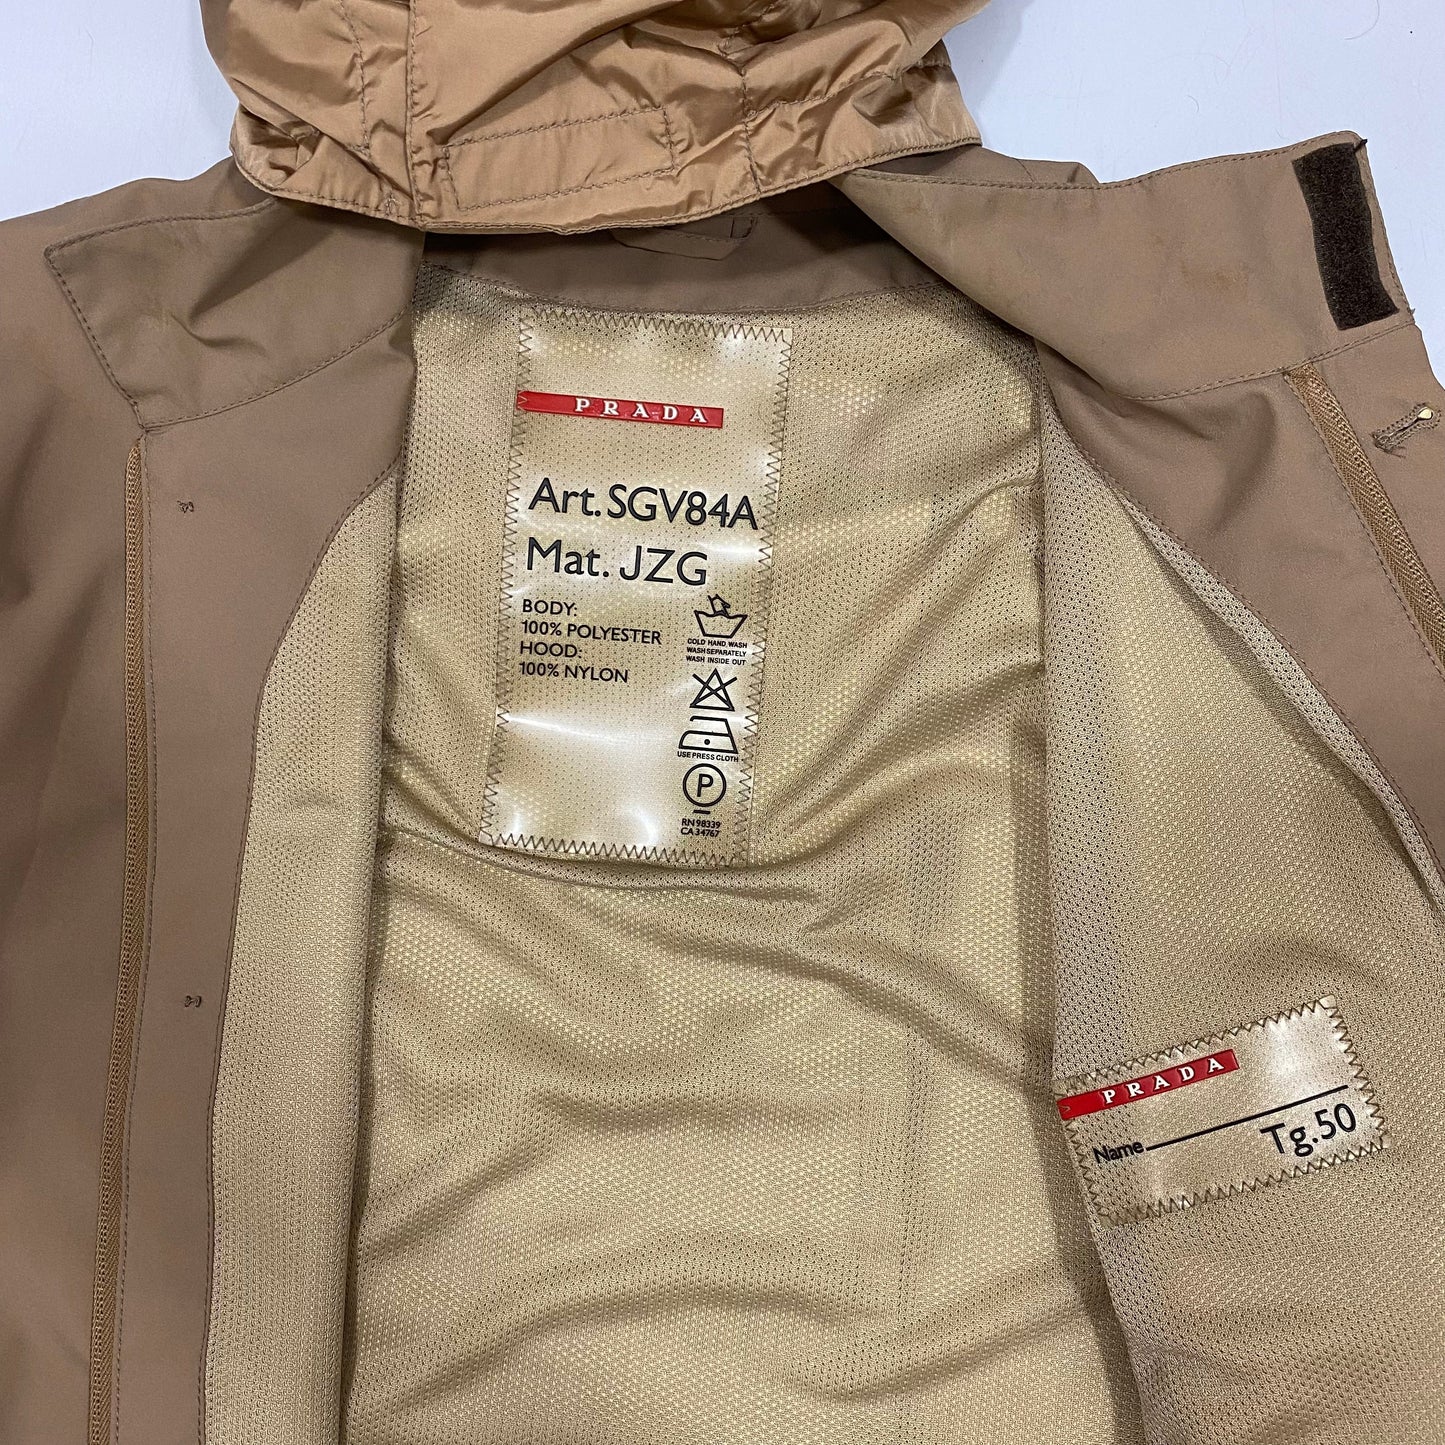 Prada Sport SS01 Goretex Jacket with Nylon Pocket Hood - L